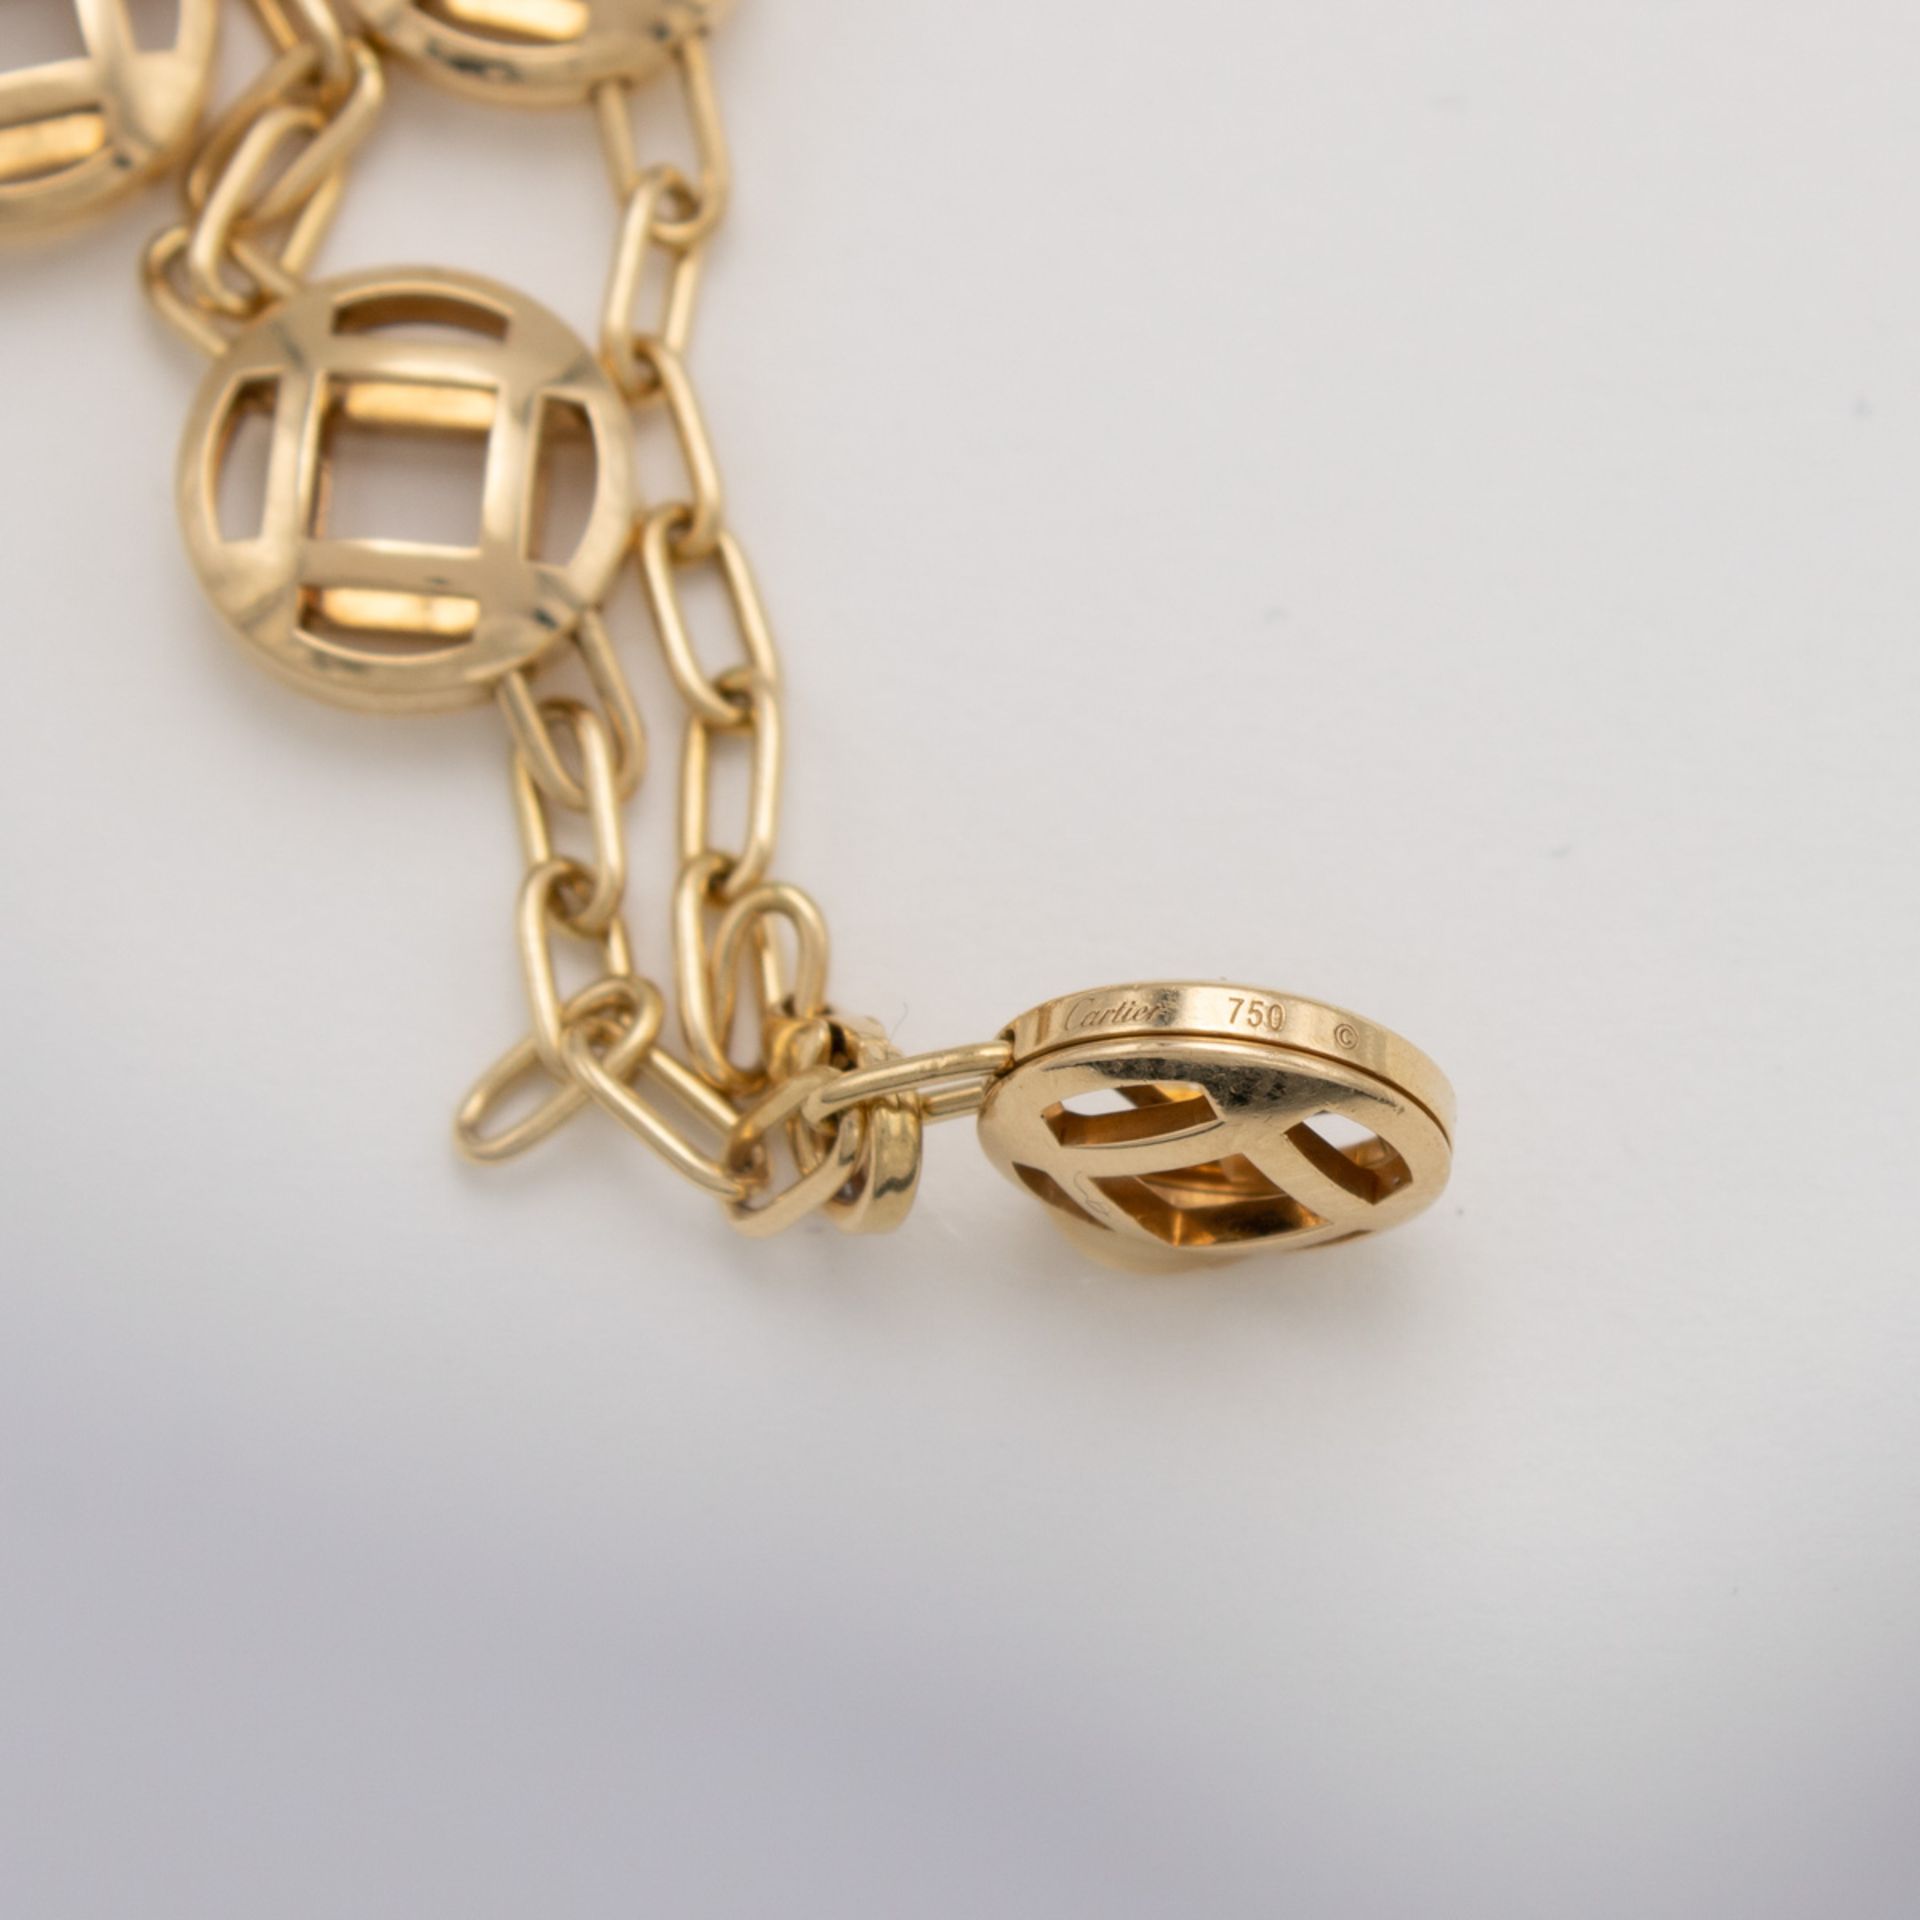 Cartier 18kt yellow gold bracelet - Image 3 of 4